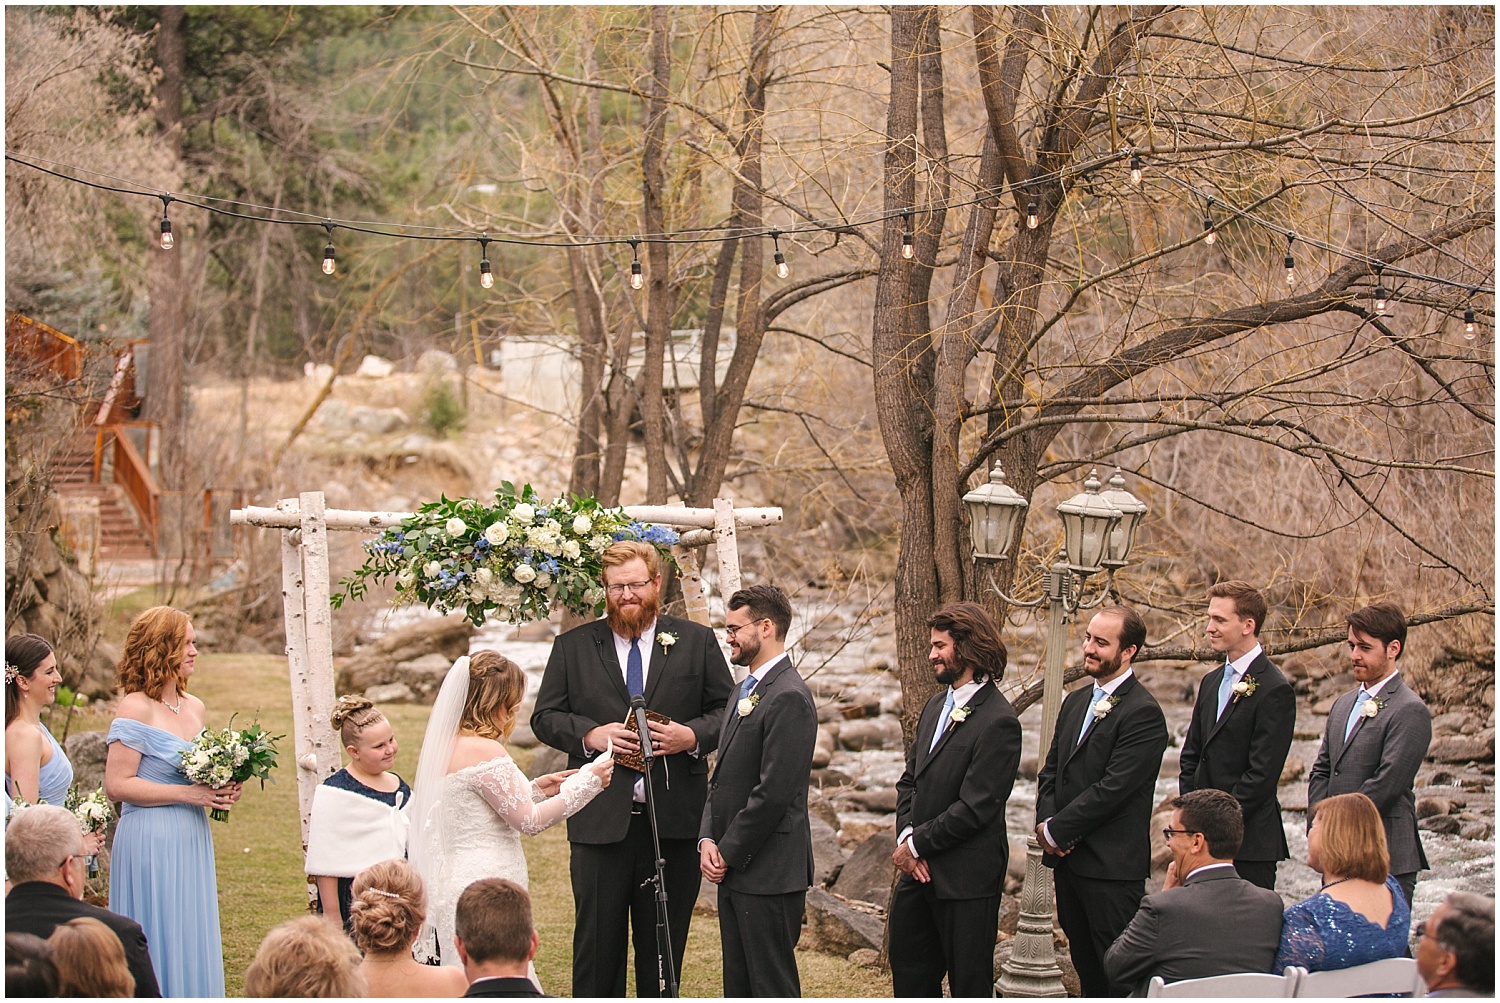 Bride and groom say their vows at wedding ceremony by the creek at Wedgewood Weddings Boulder Creek wedding venue